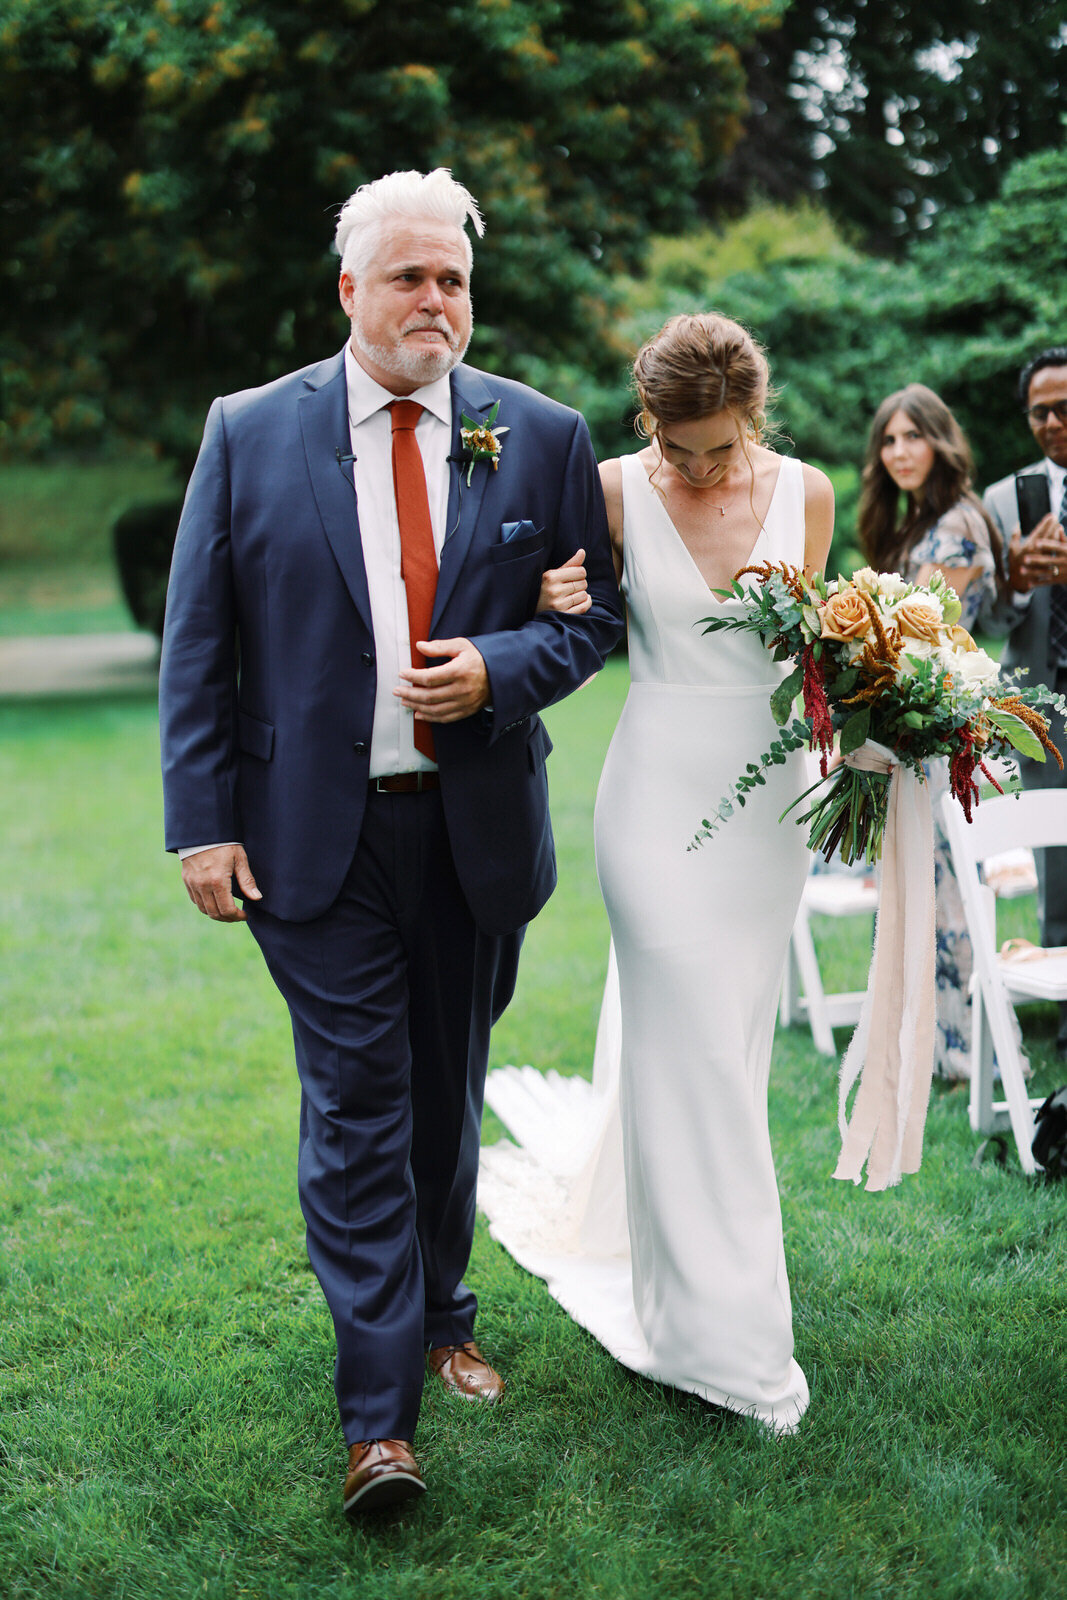 Chic and modern wedding photography during an elegant wedding in Rhode Island